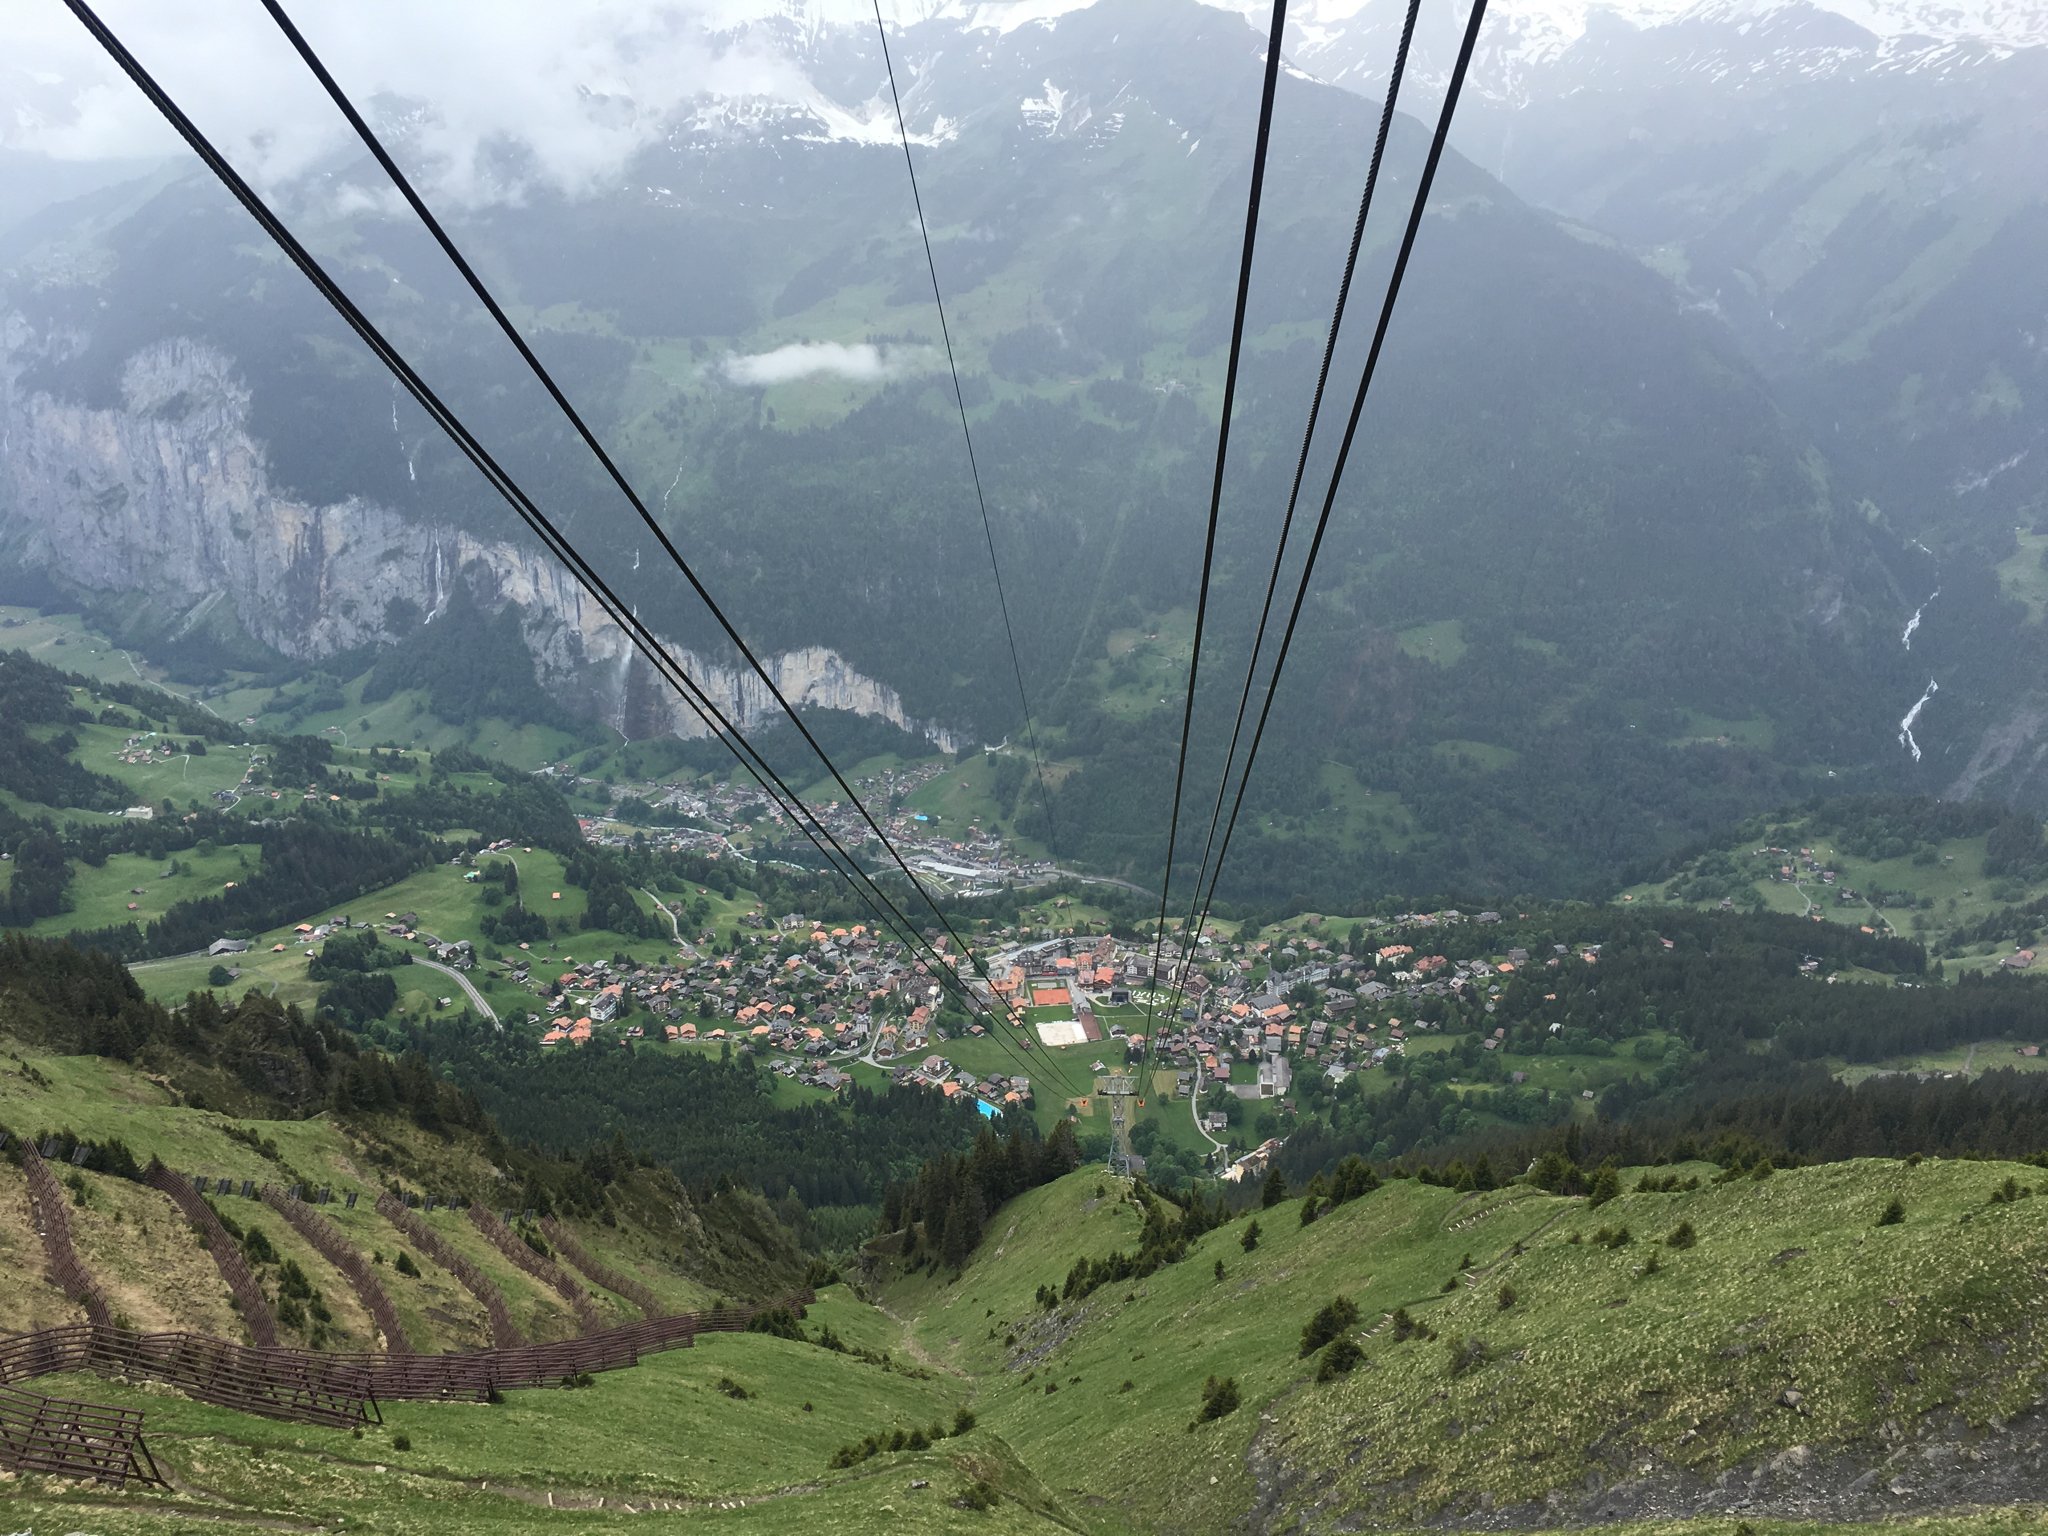 View from the gondola heading up to Männlichen from Wengen